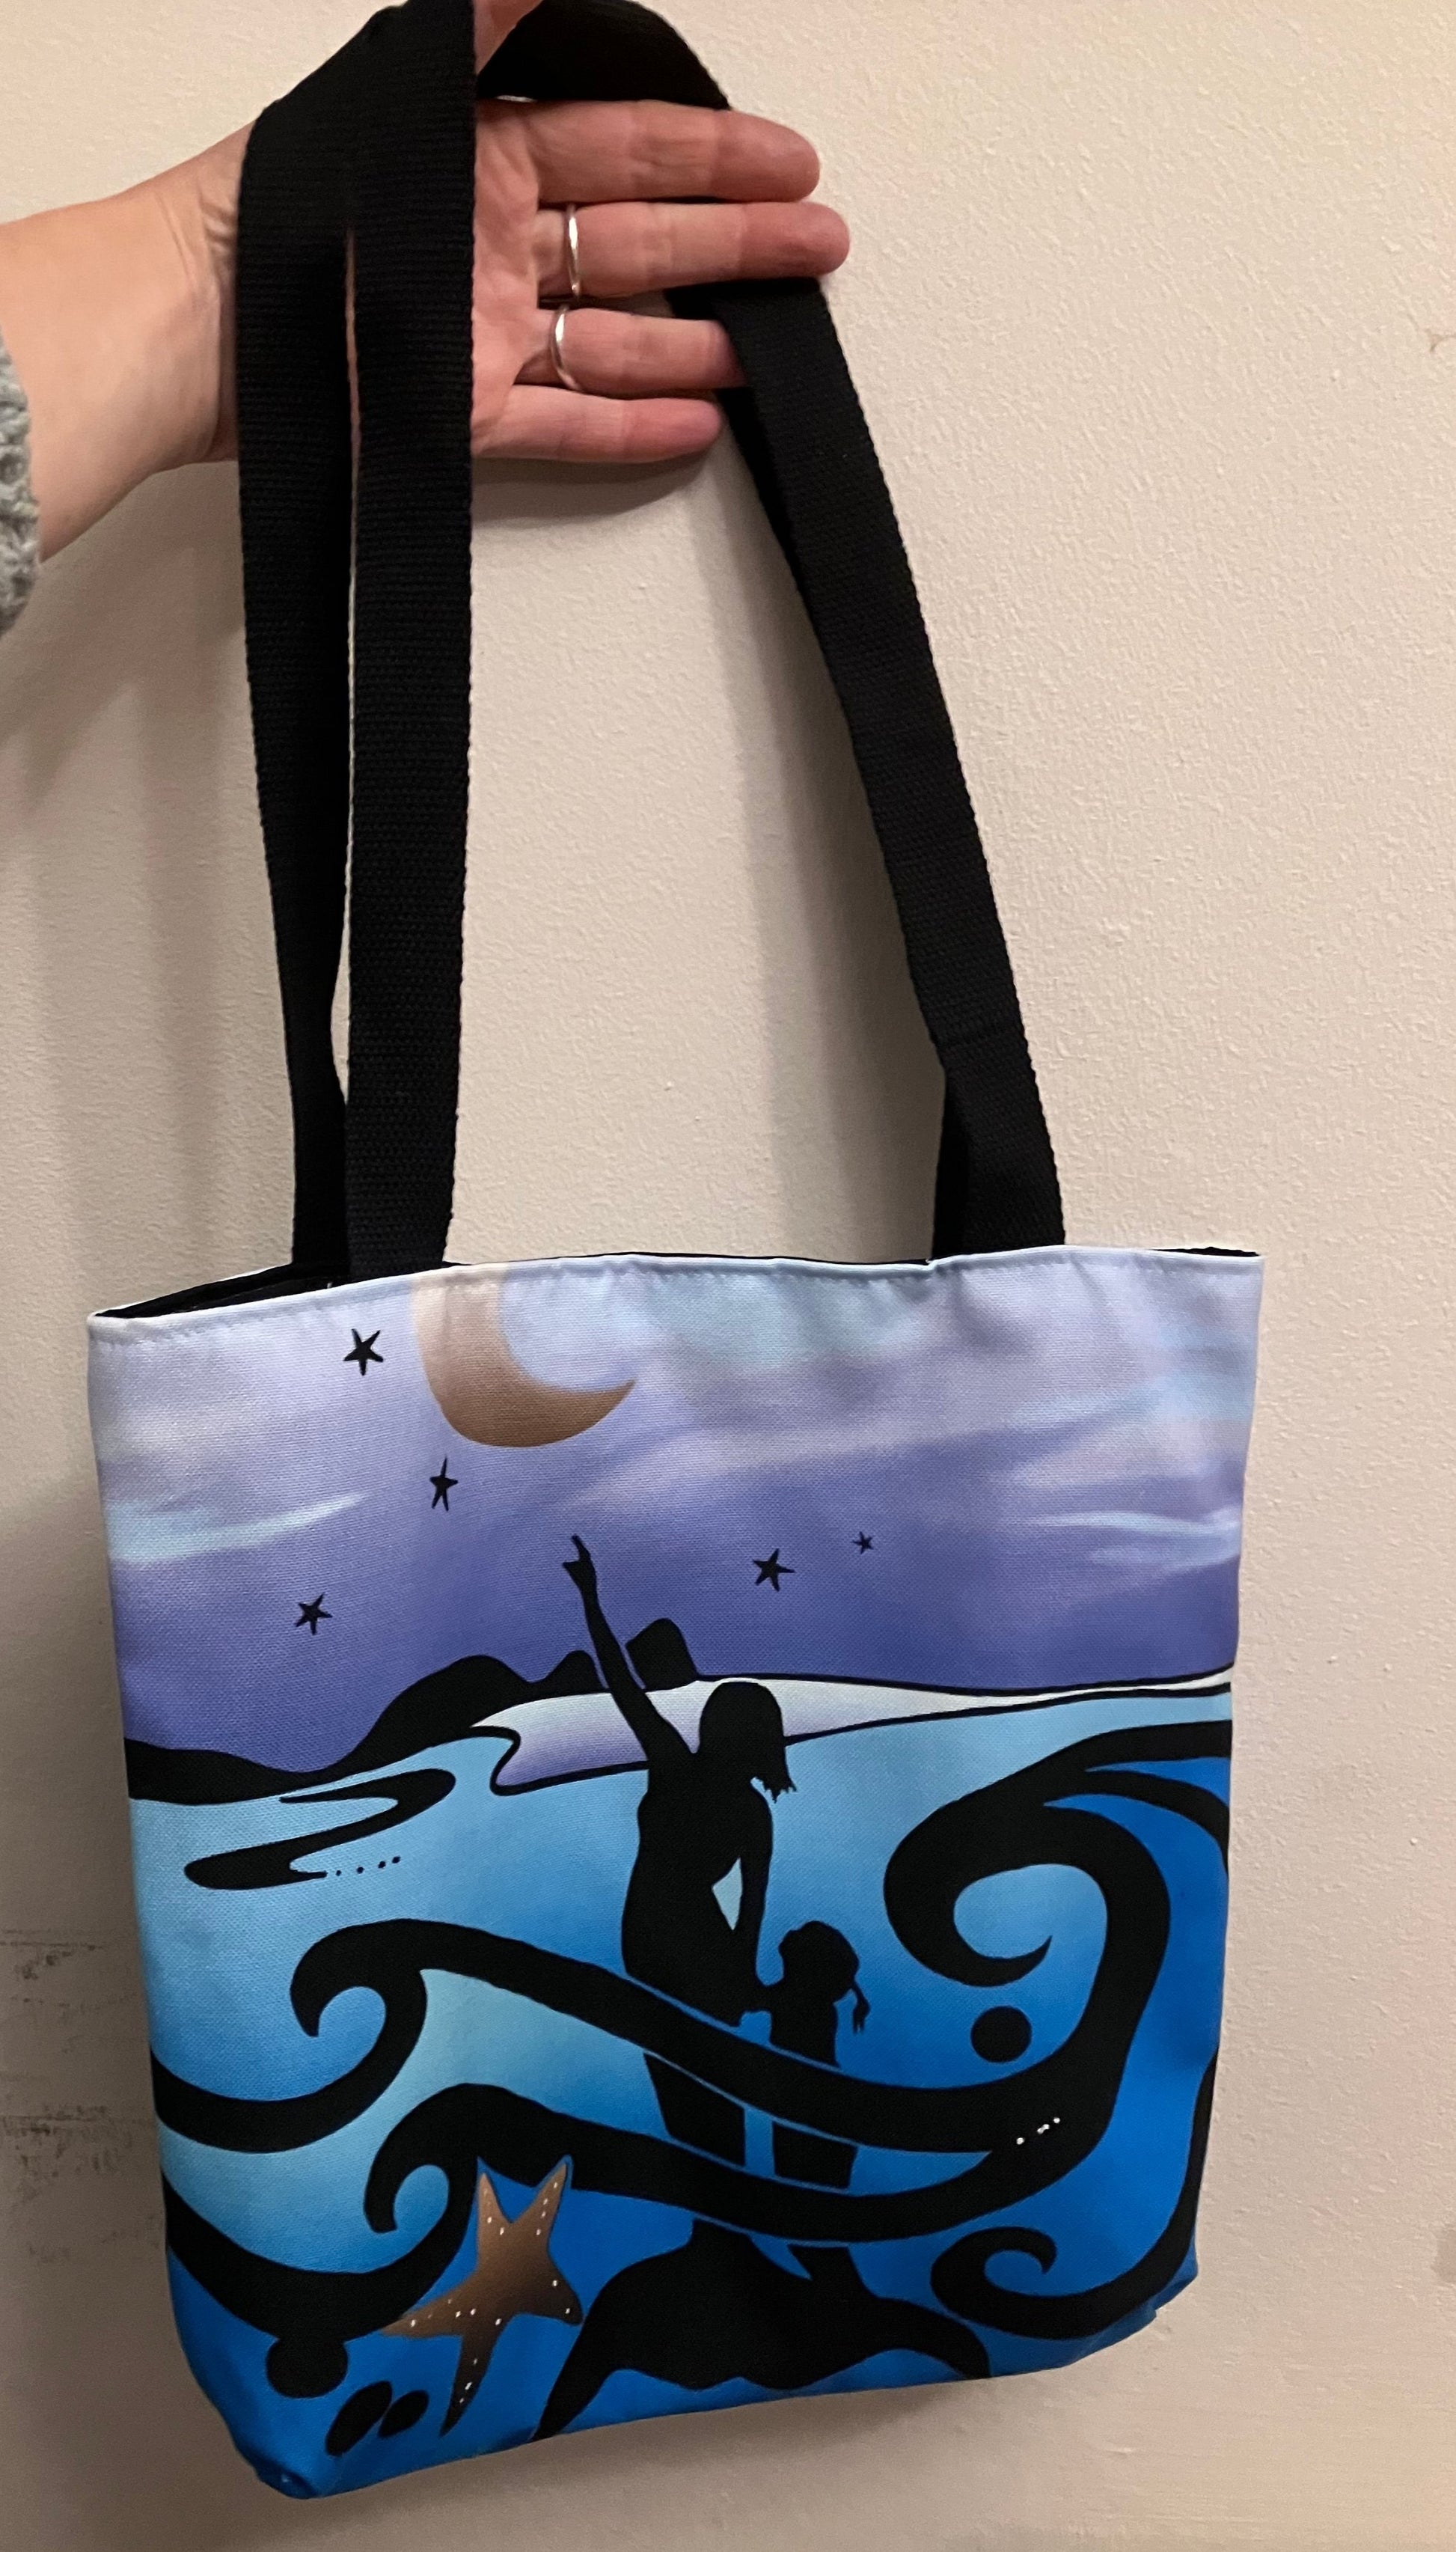 Gower mermaids shoulder bag